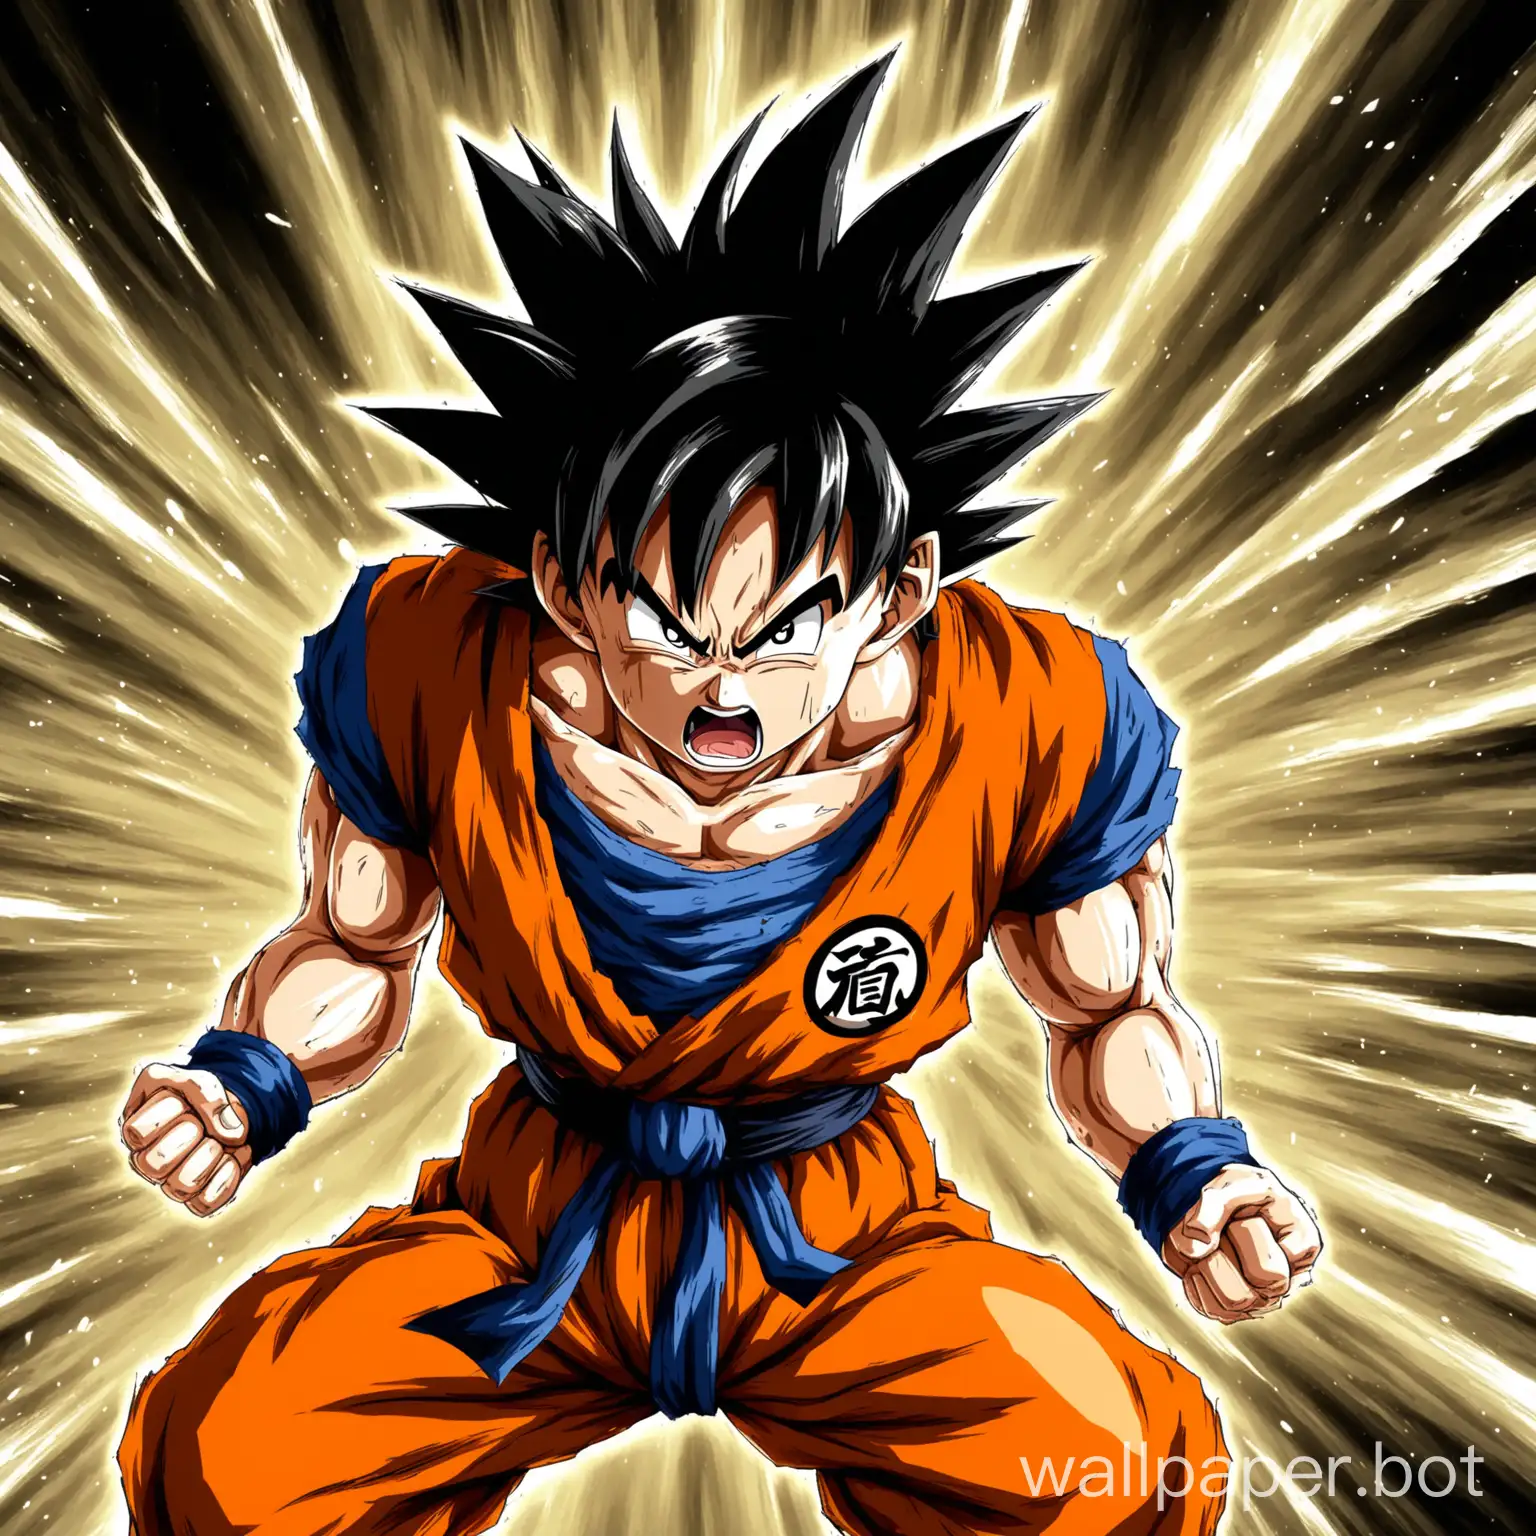 Powerful-Goku-in-High-Definition-Displaying-Aggression